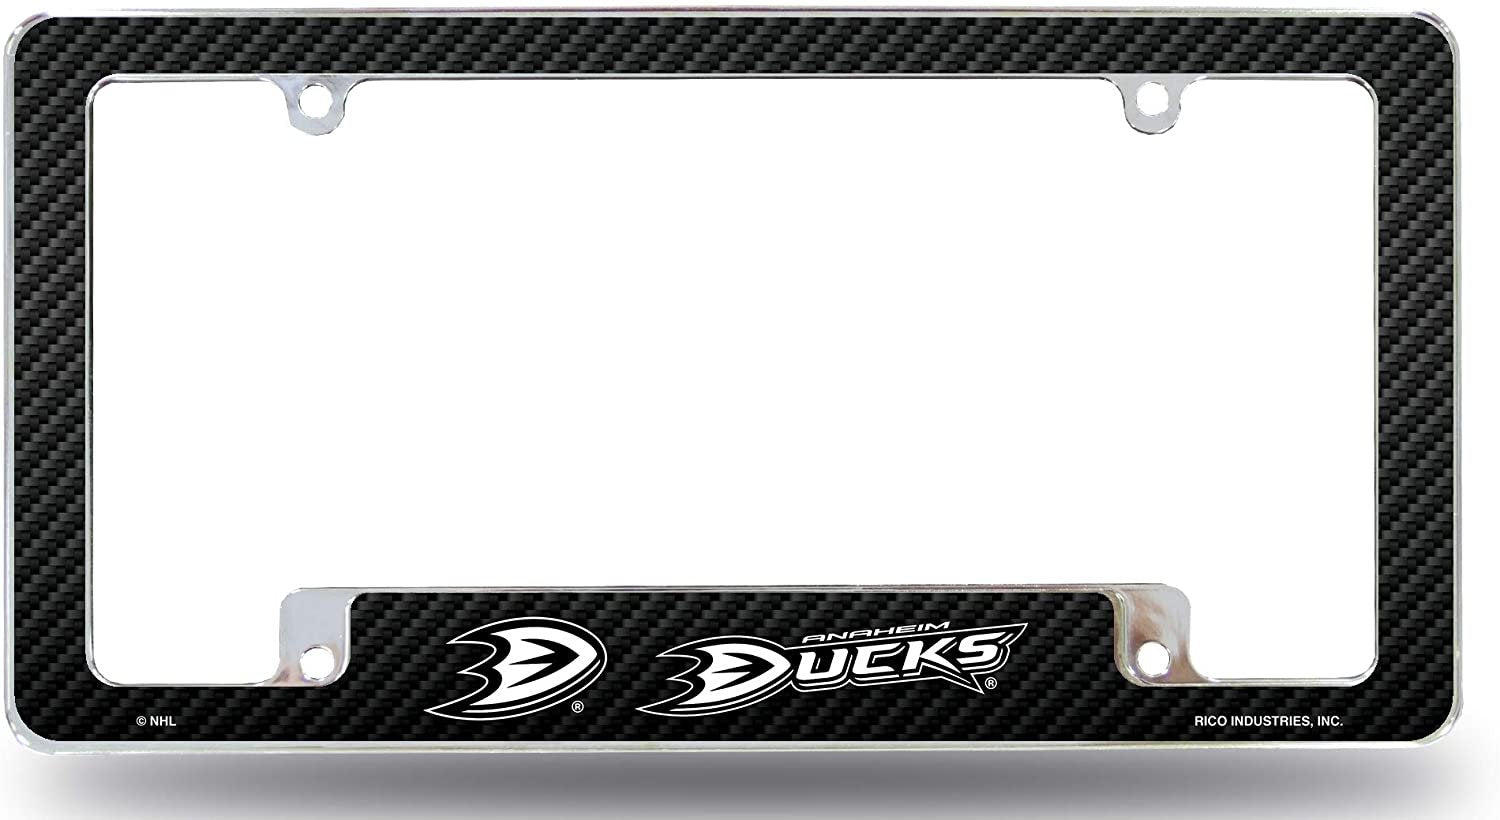 Anaheim Ducks Metal License Plate Frame Chrome Tag Cover, Carbon Fiber Design, 12x6 Inch